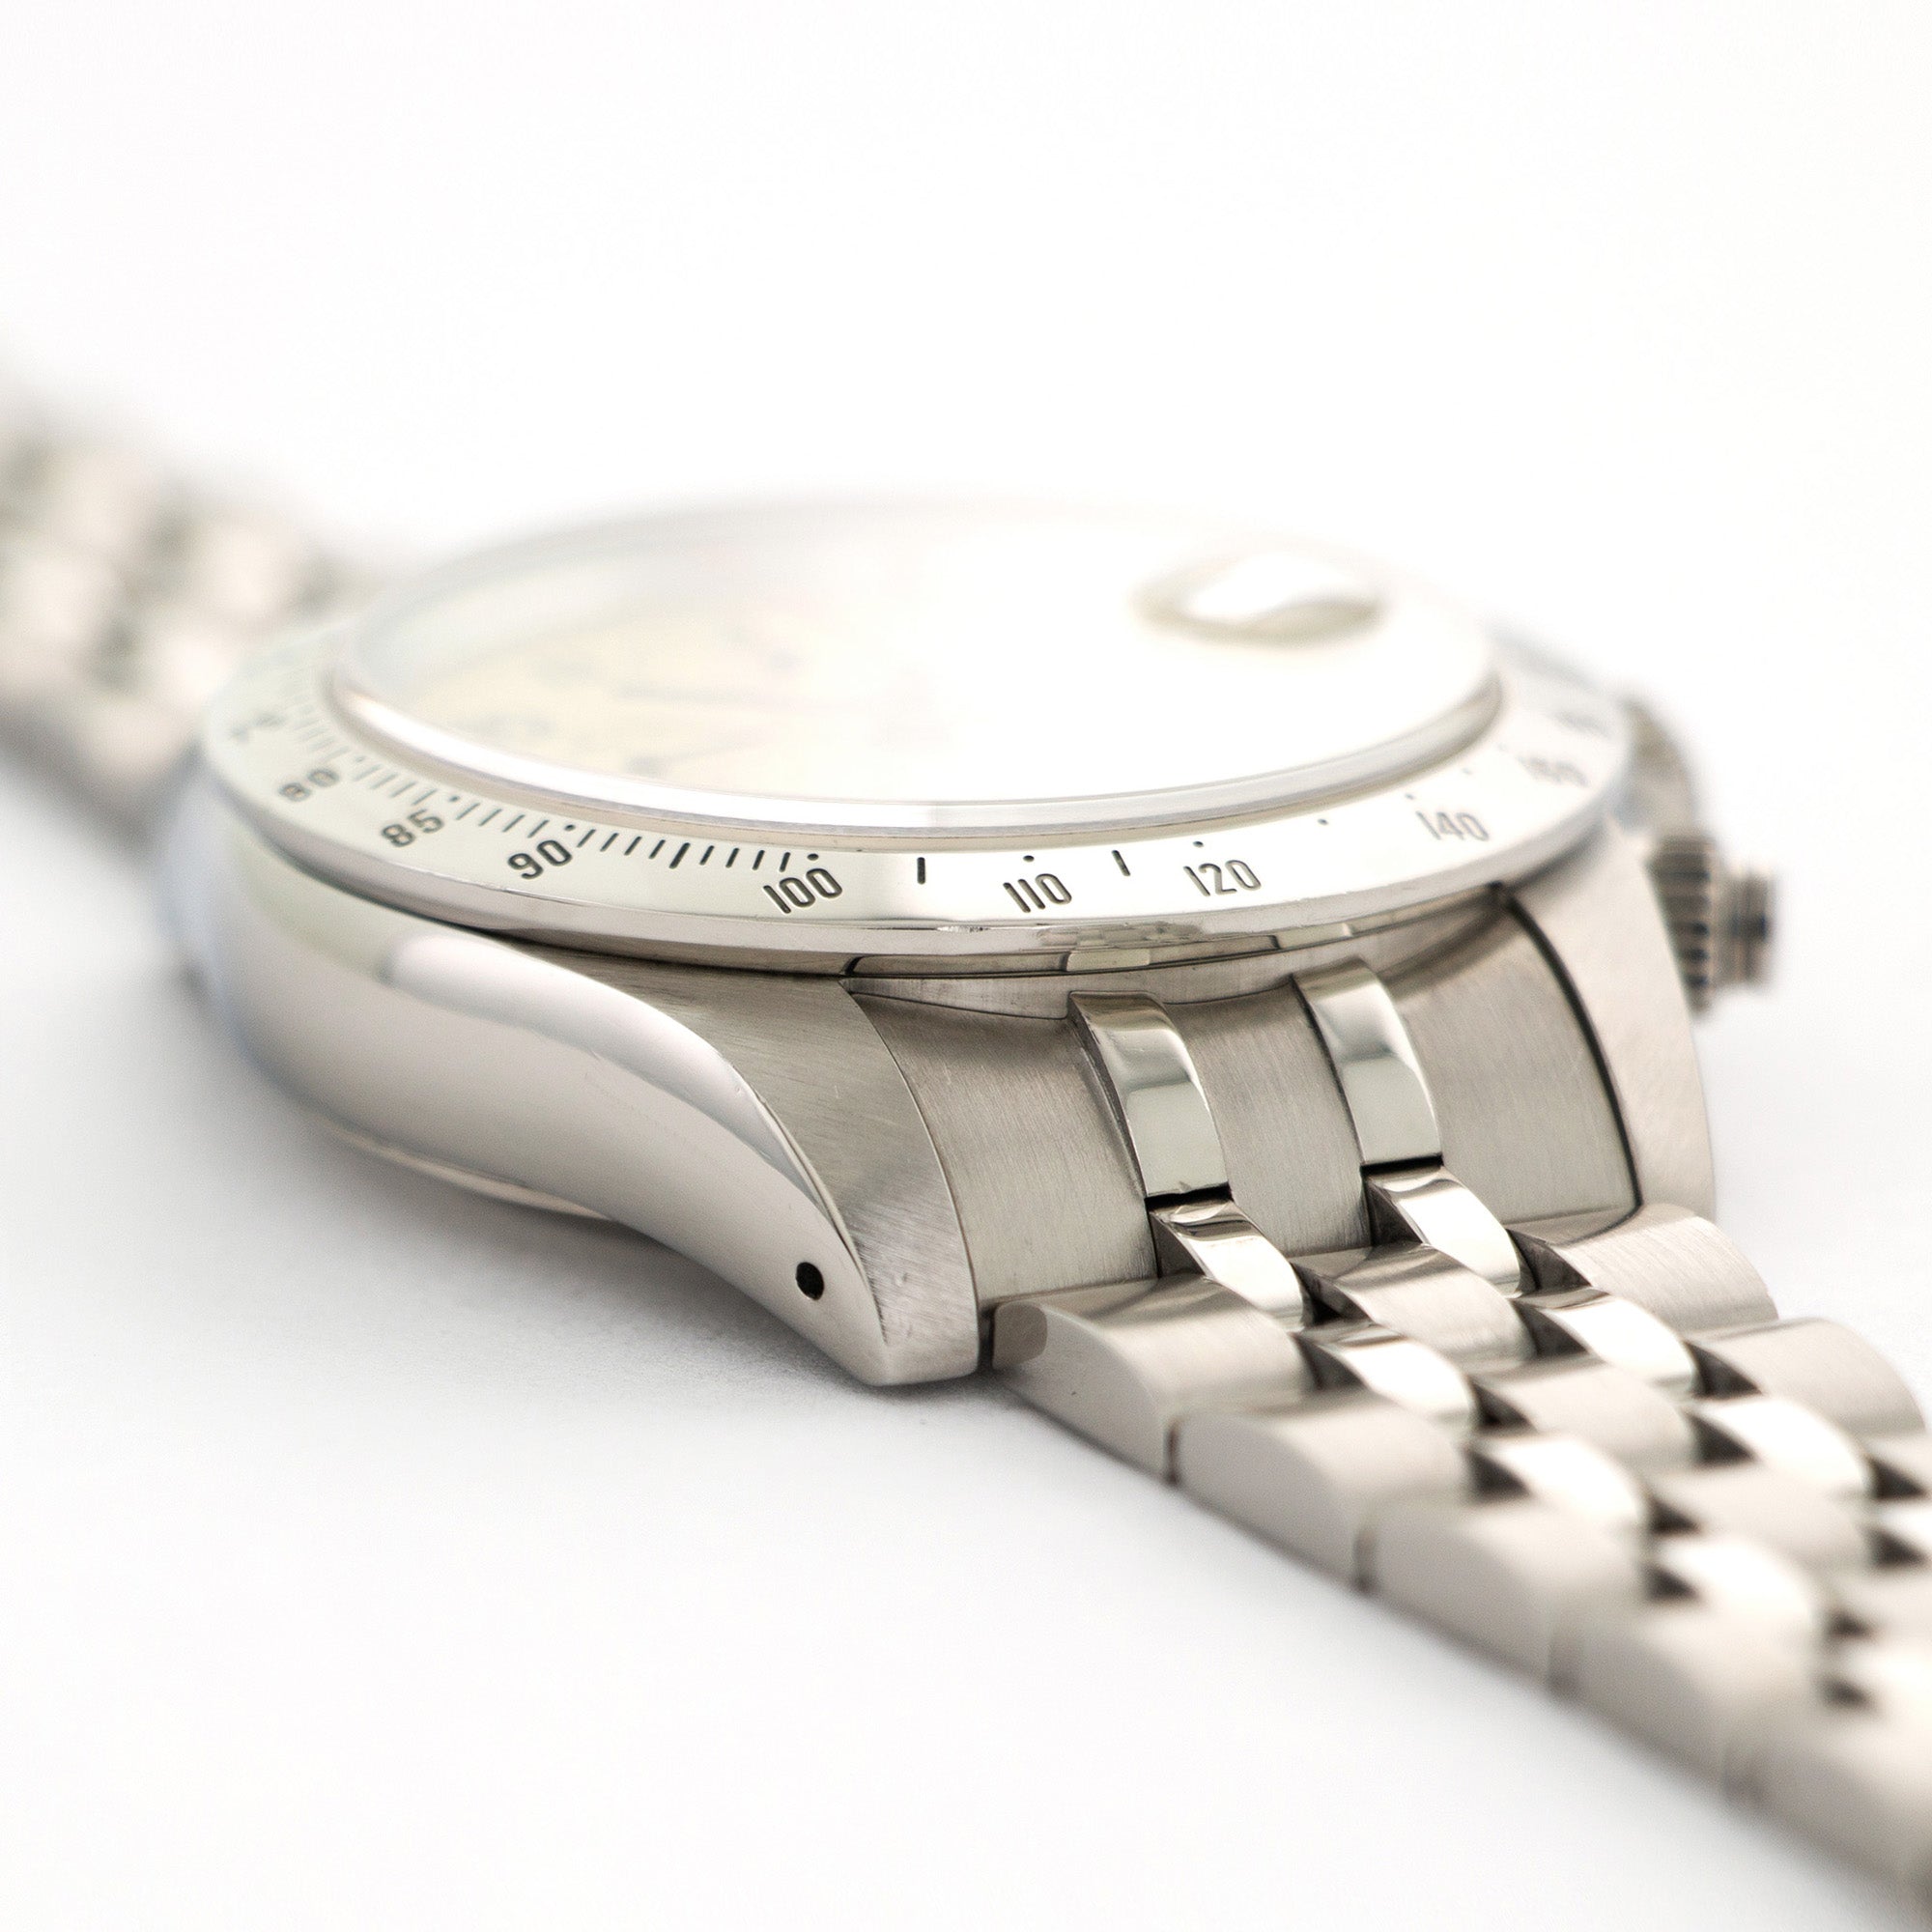 Tudor - Tudor Chrono-Time Tiger Watch Ref. 79280 with Original Warranty Paper - The Keystone Watches